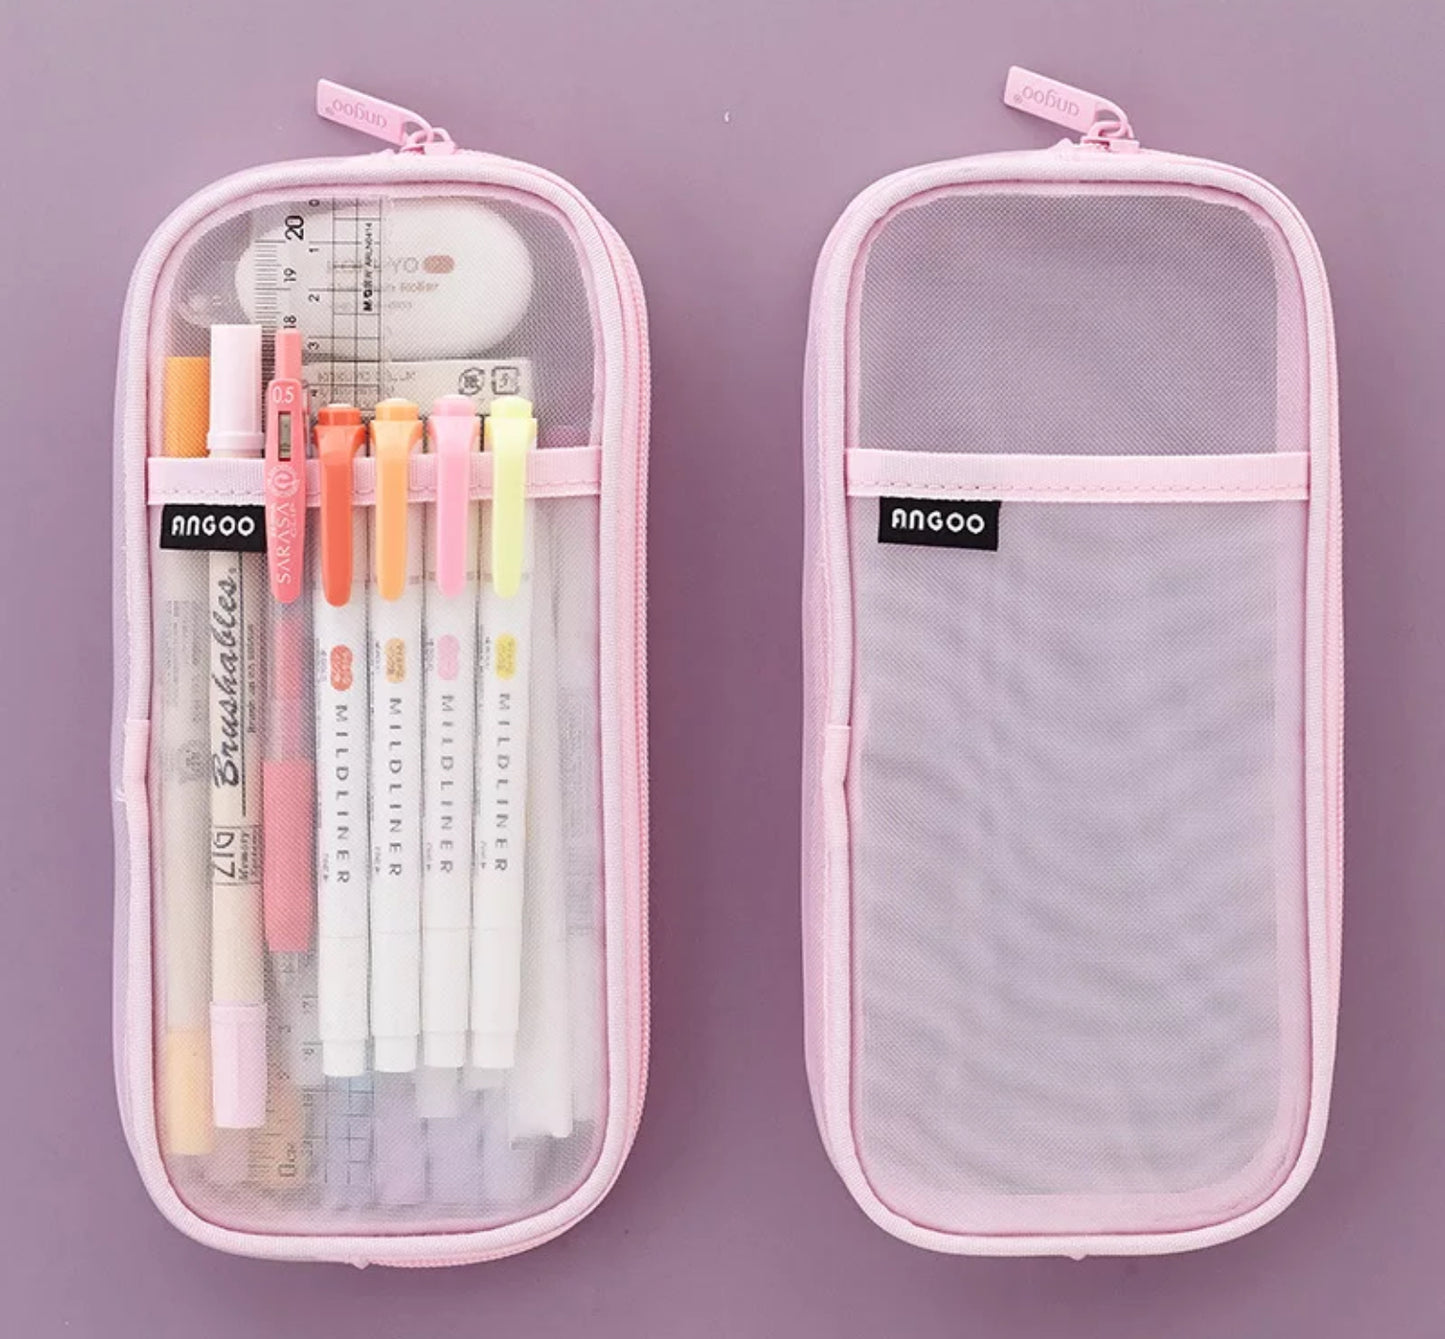 Yyeselk Pencil Case, Aesthetic Pen Pouch, Candy Colored Large